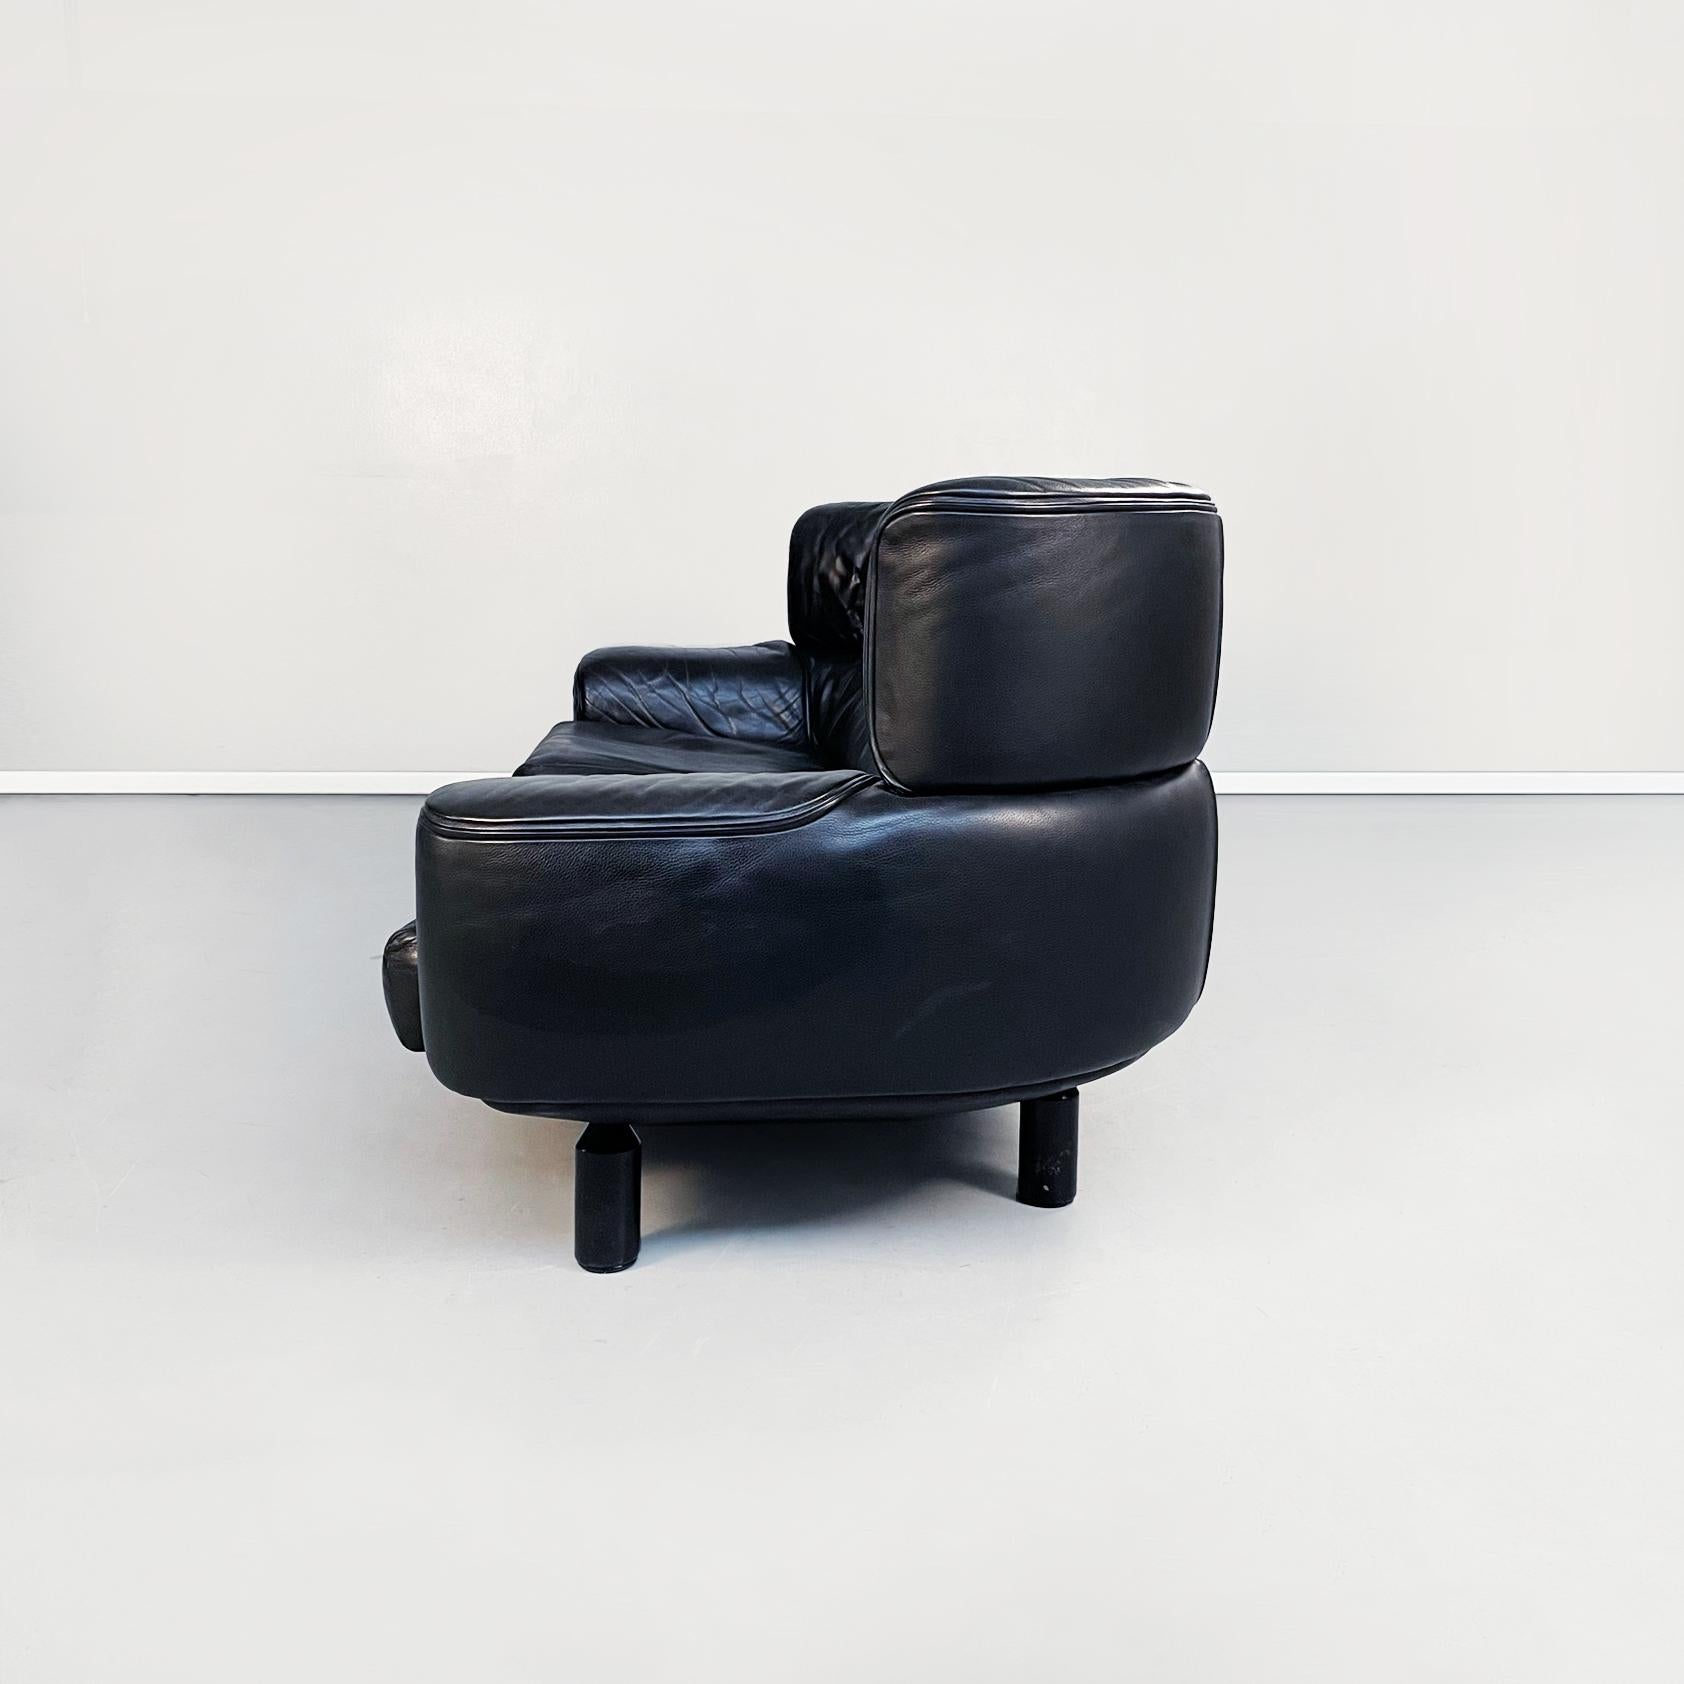 Mid-Century Modern Italian Modern Black Leather Wood 3seat Sofa Bull by Frattini for Cassina, 1980s For Sale